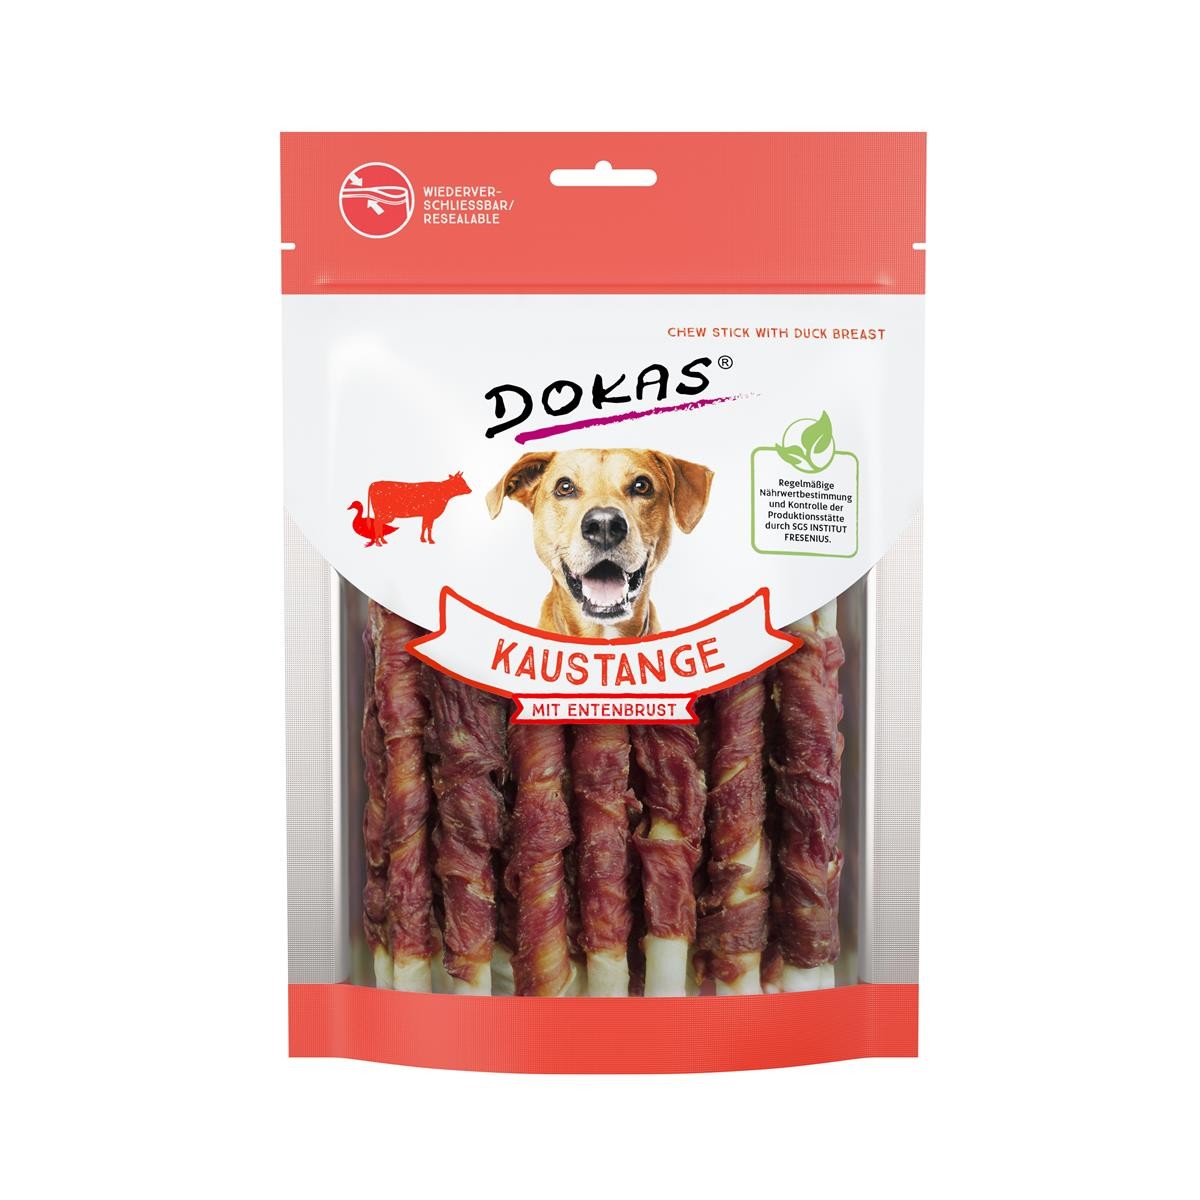 Dokas Dog Snack Kaustange mit Entenbrust 200g Hundesnack